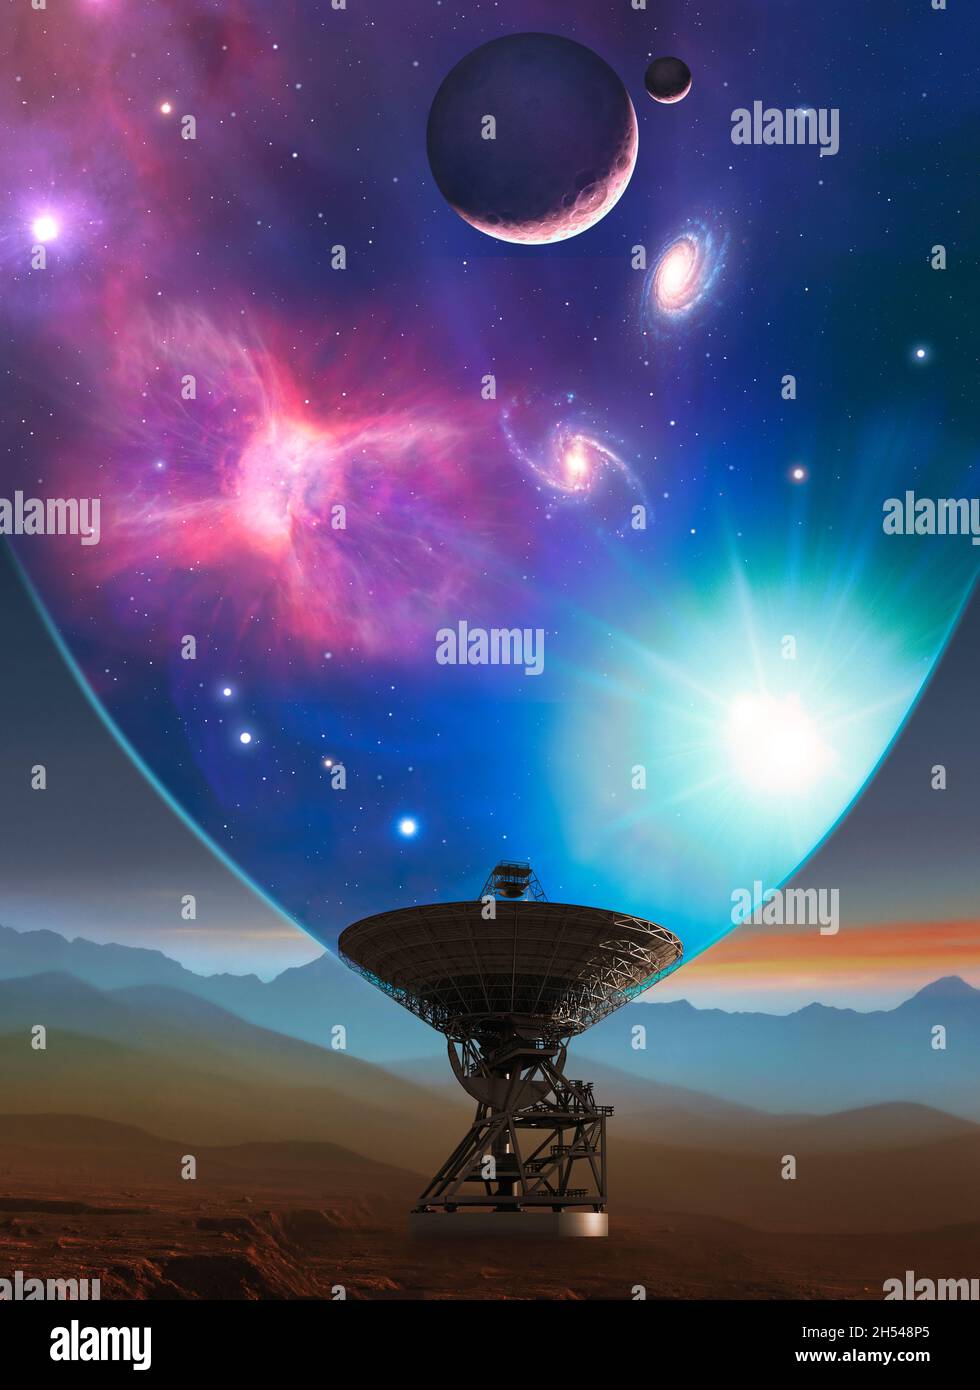 Telescope viewing the universe, illustration Stock Photo